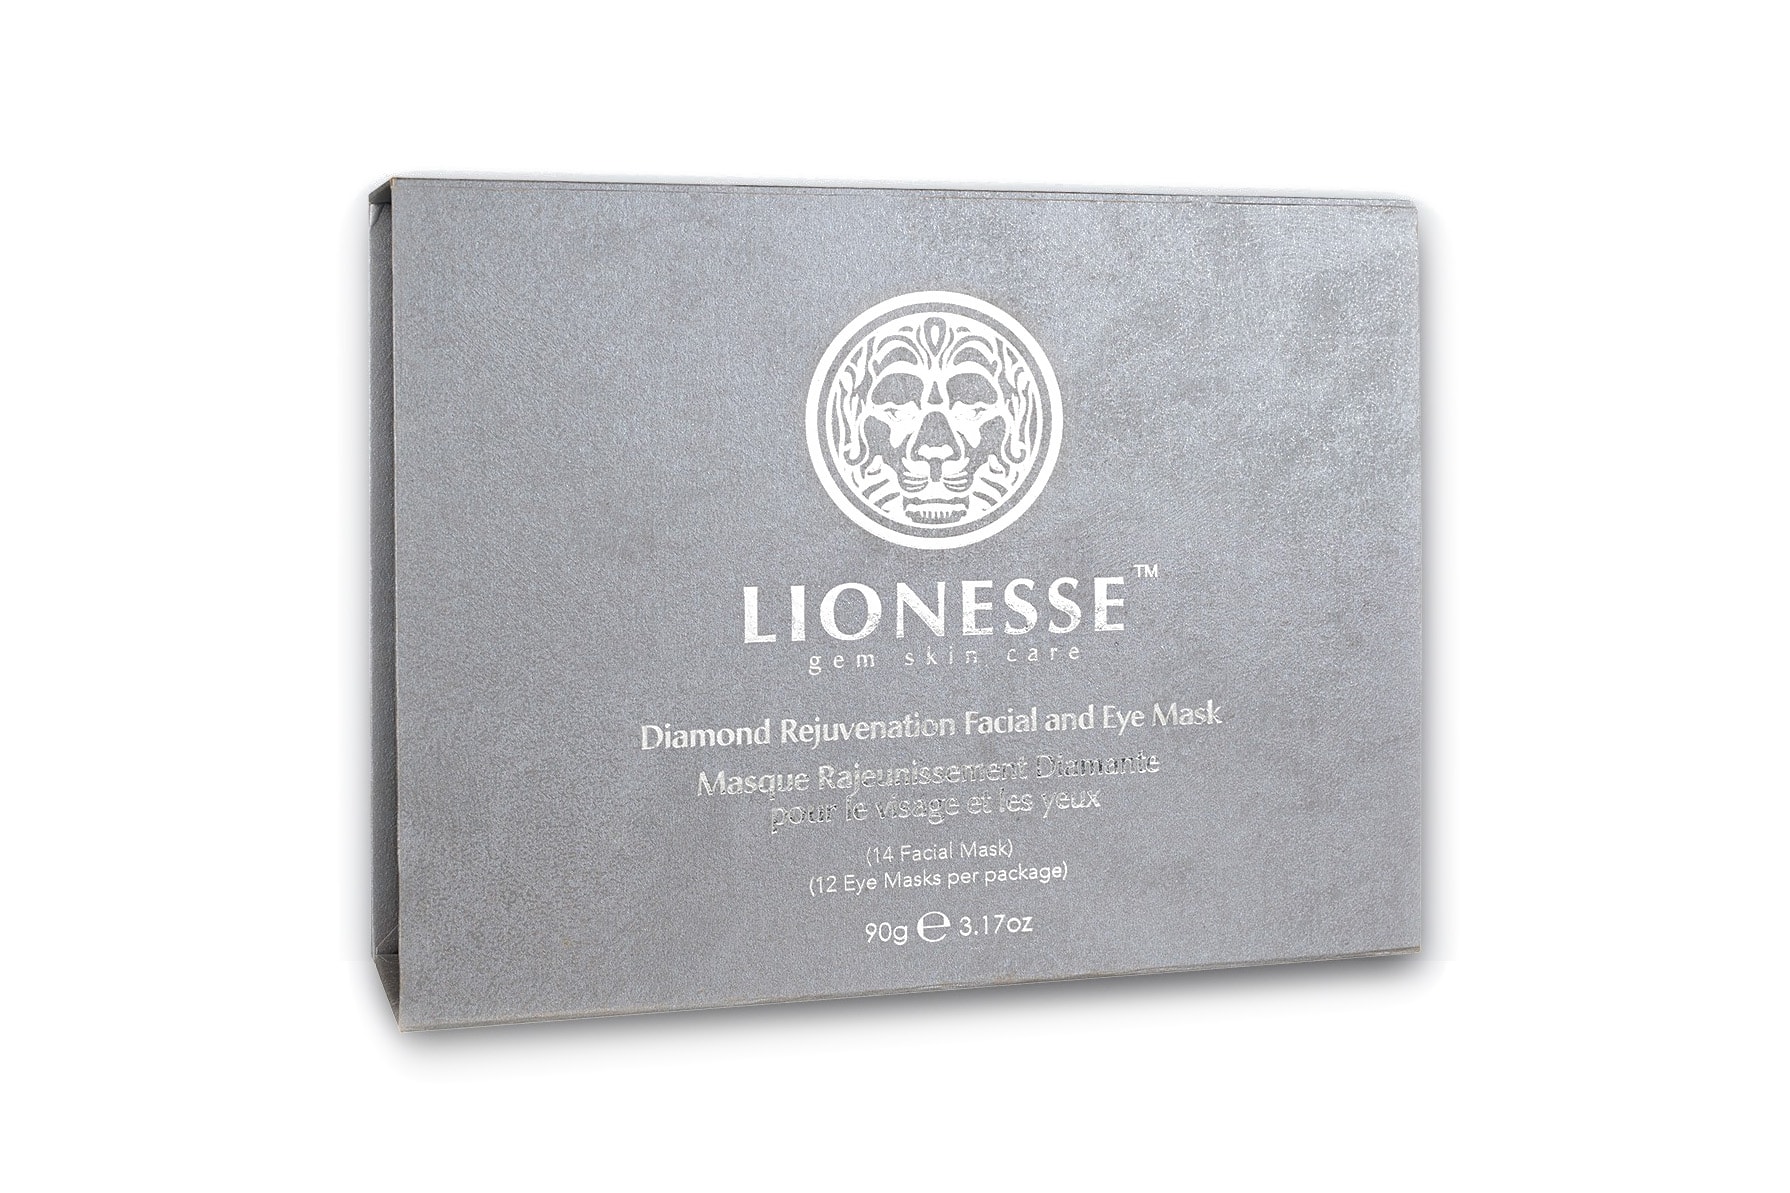 Lionesse $2,000 USD Diamond Face Mask Treatment Expensive Skincare